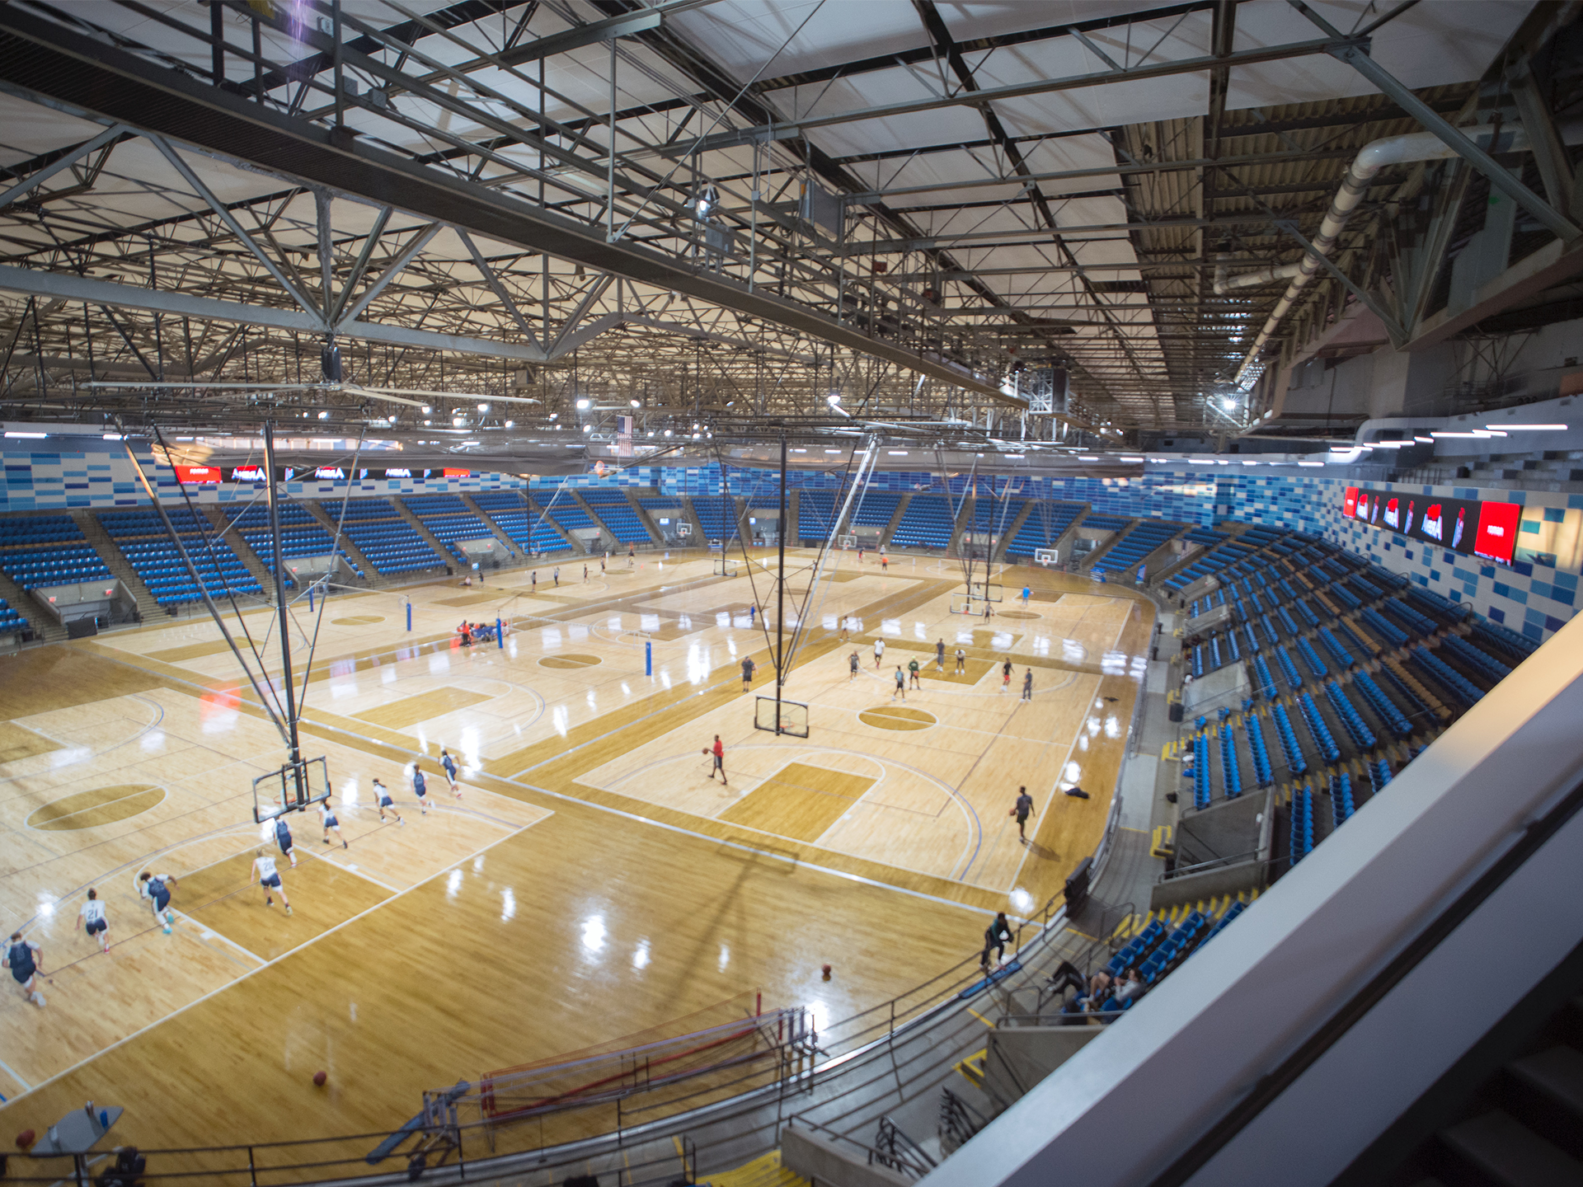 Hy-vee arena in Kansas City, missouri 2019 best project